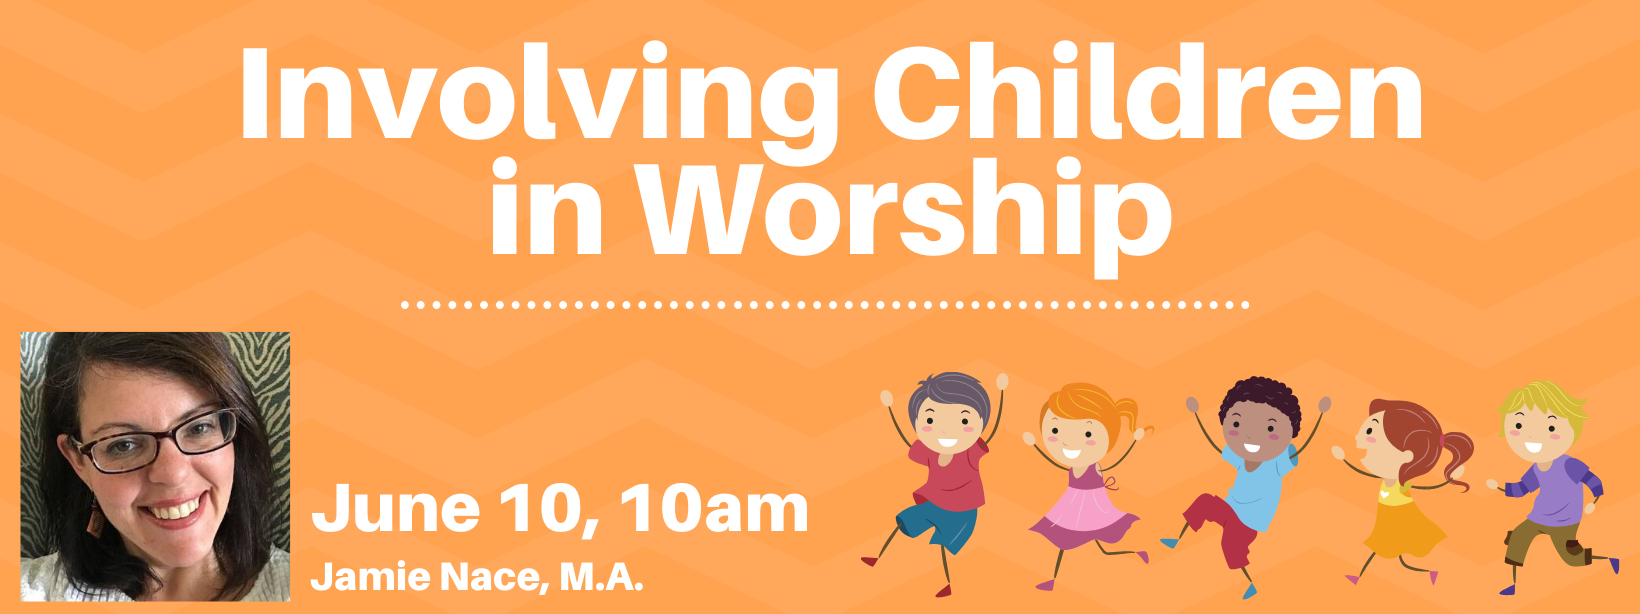 Involving Children in Worship